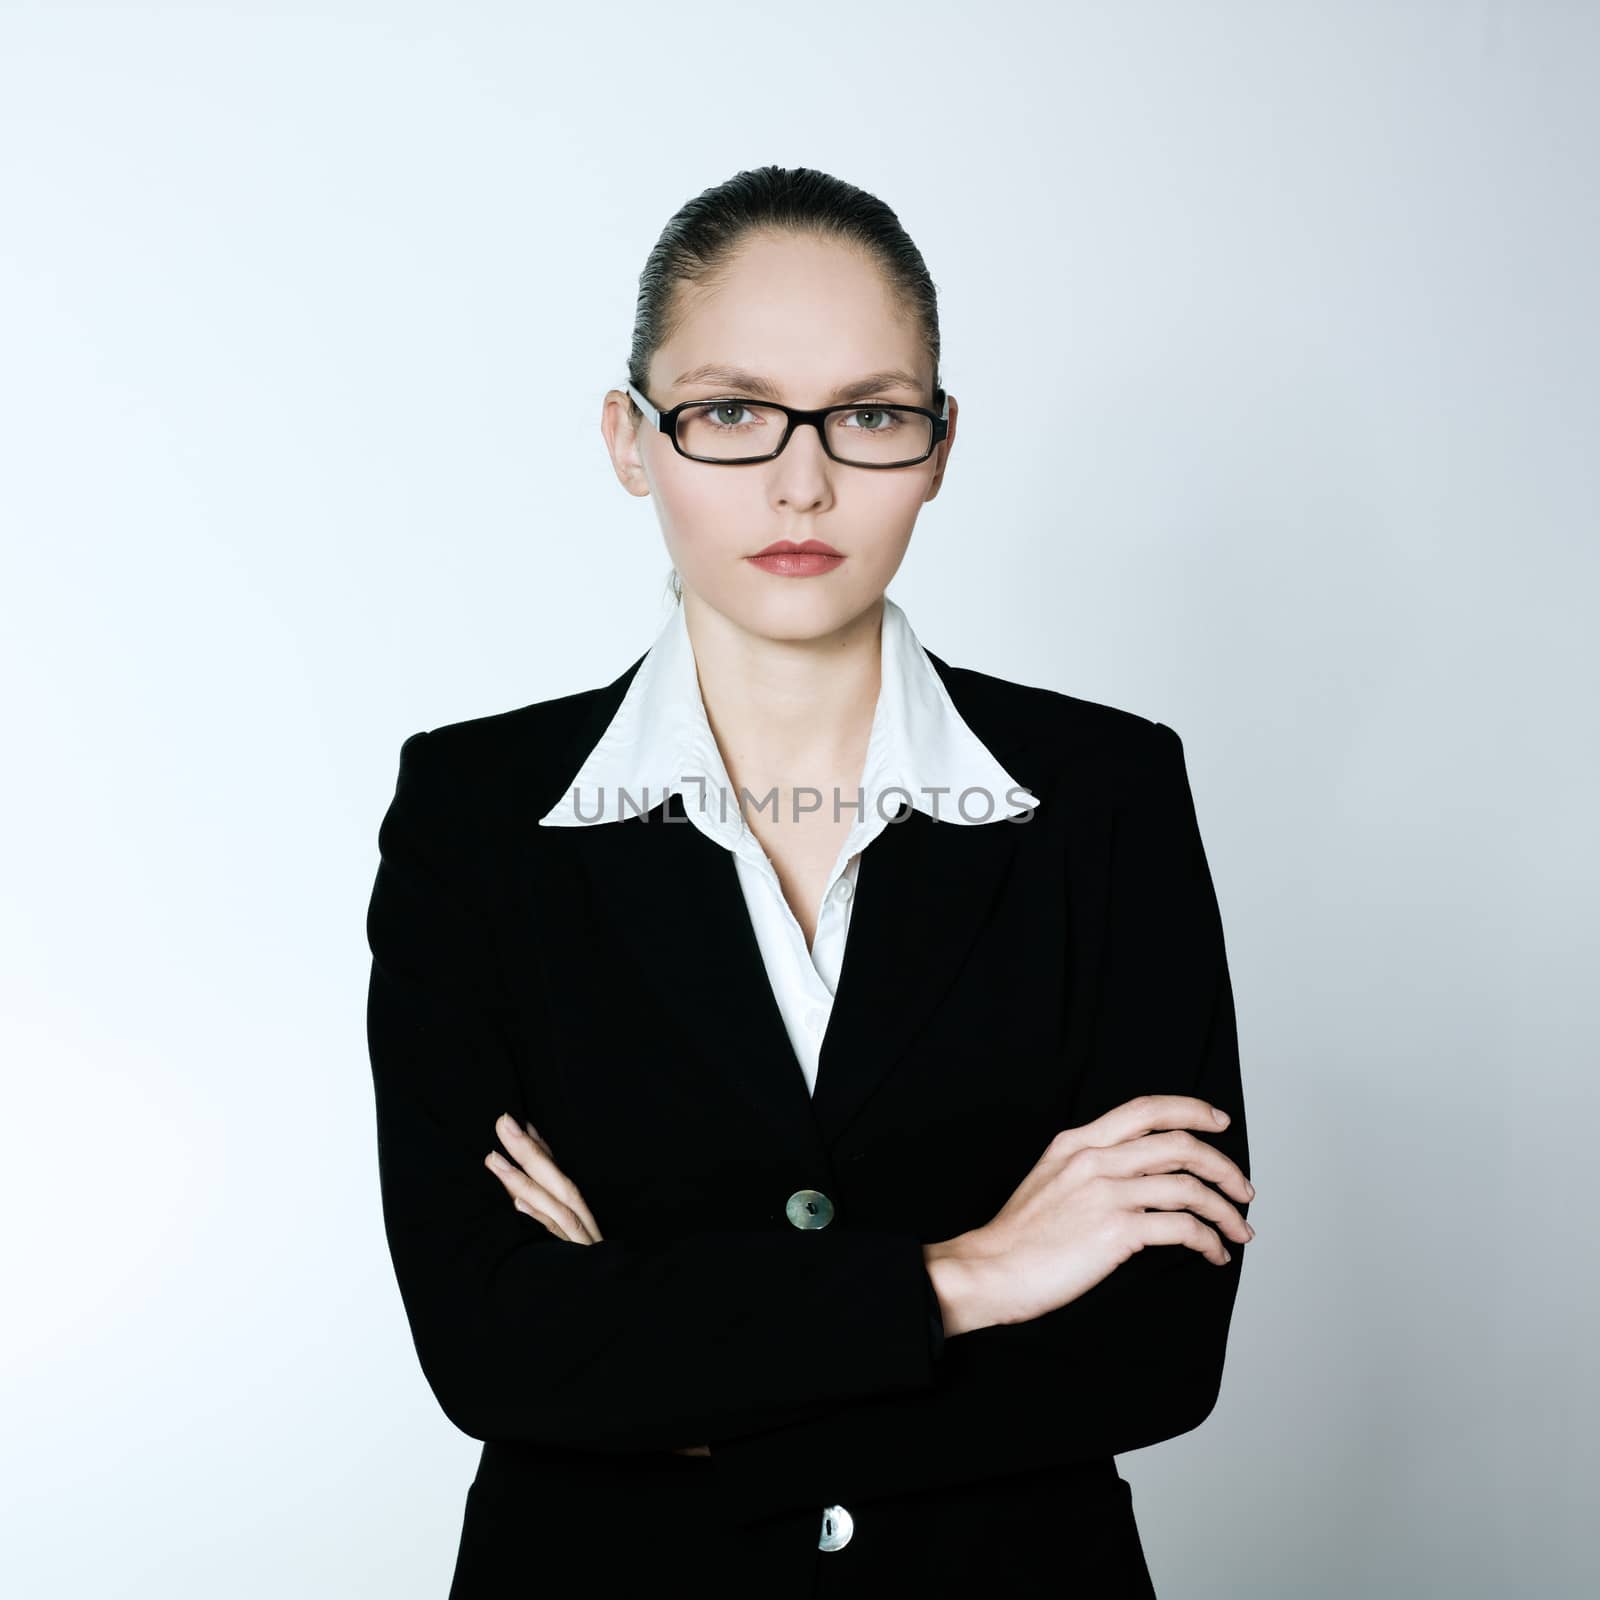 studio shot portrait of one caucasian young serious business woman